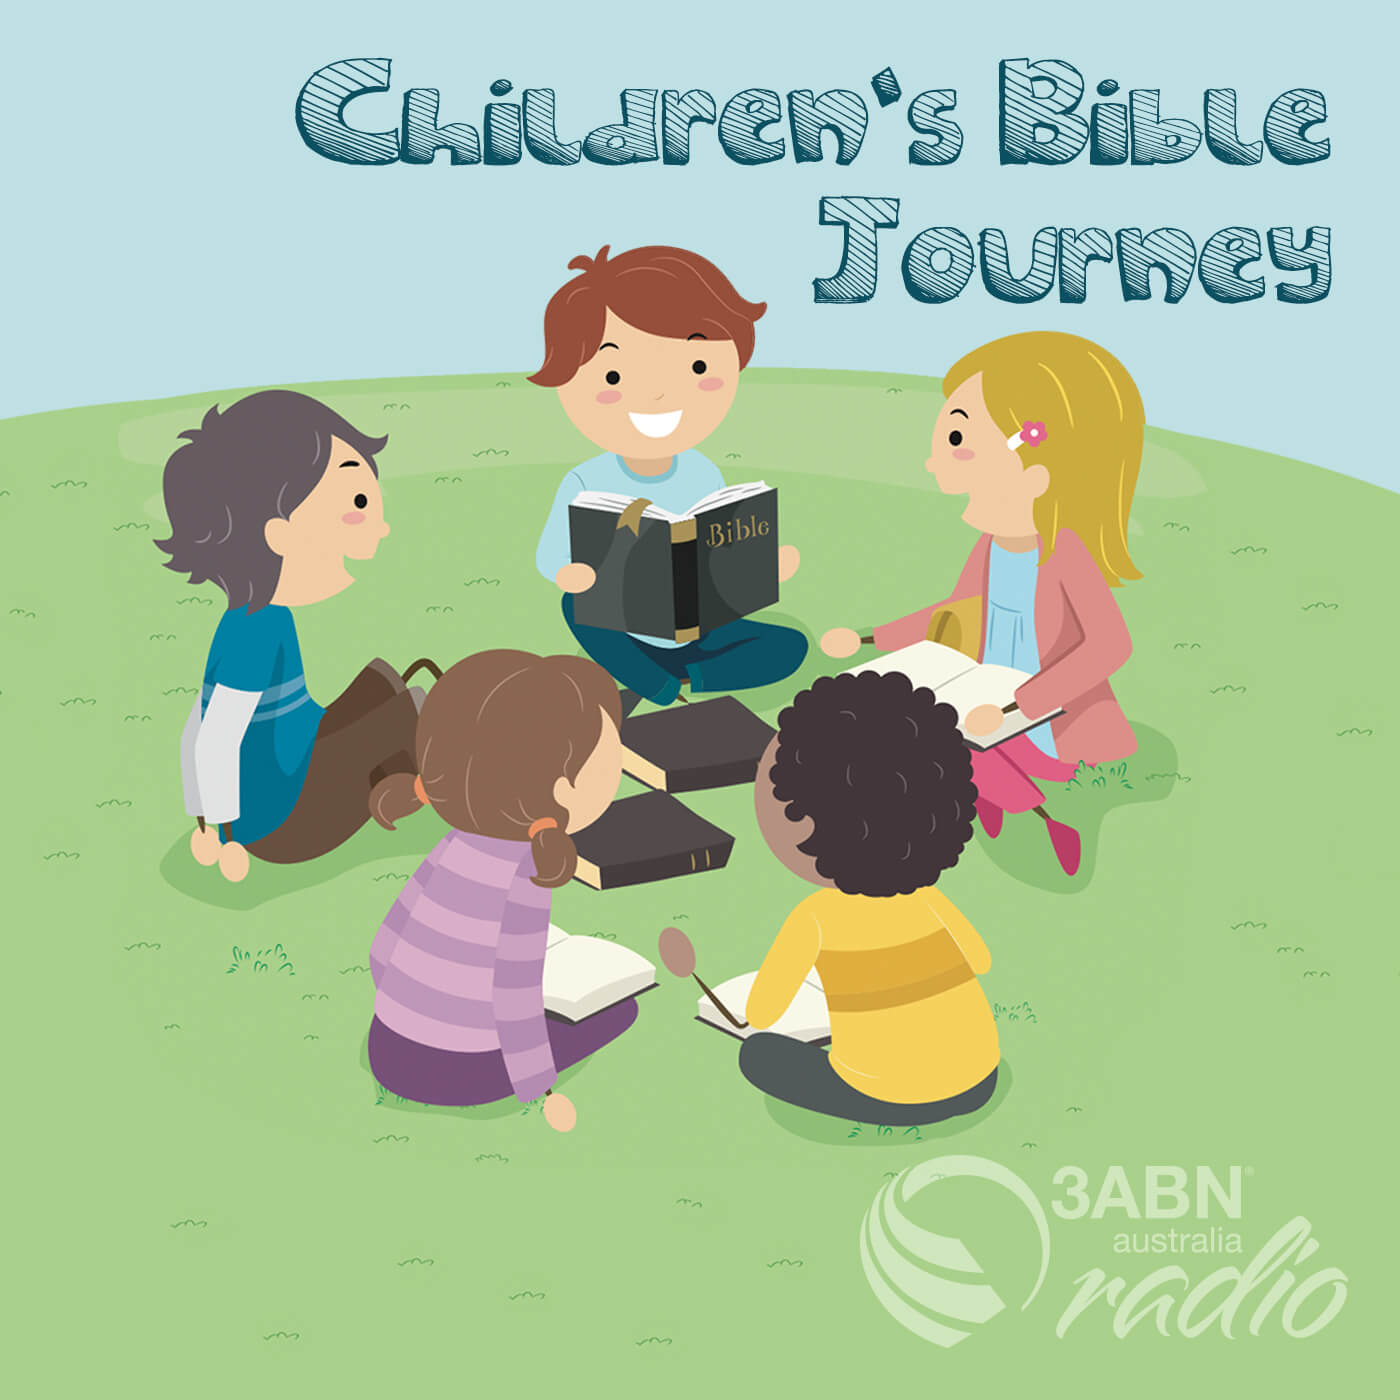 Children's Bible Journey - 2138